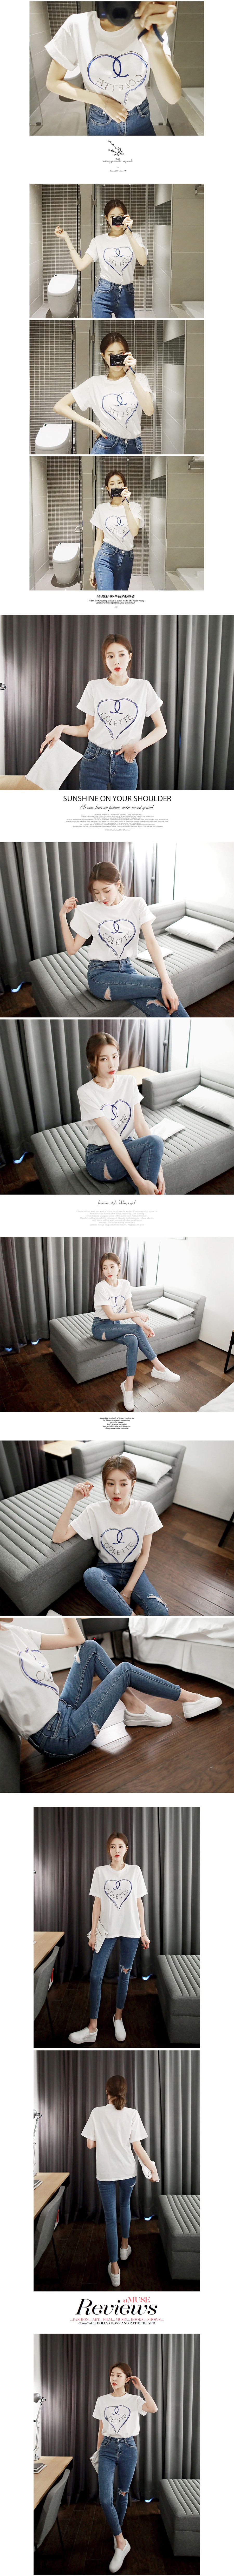 KOREA Heart Colette Letter drawing T-Shirt #White [Free Shipping]